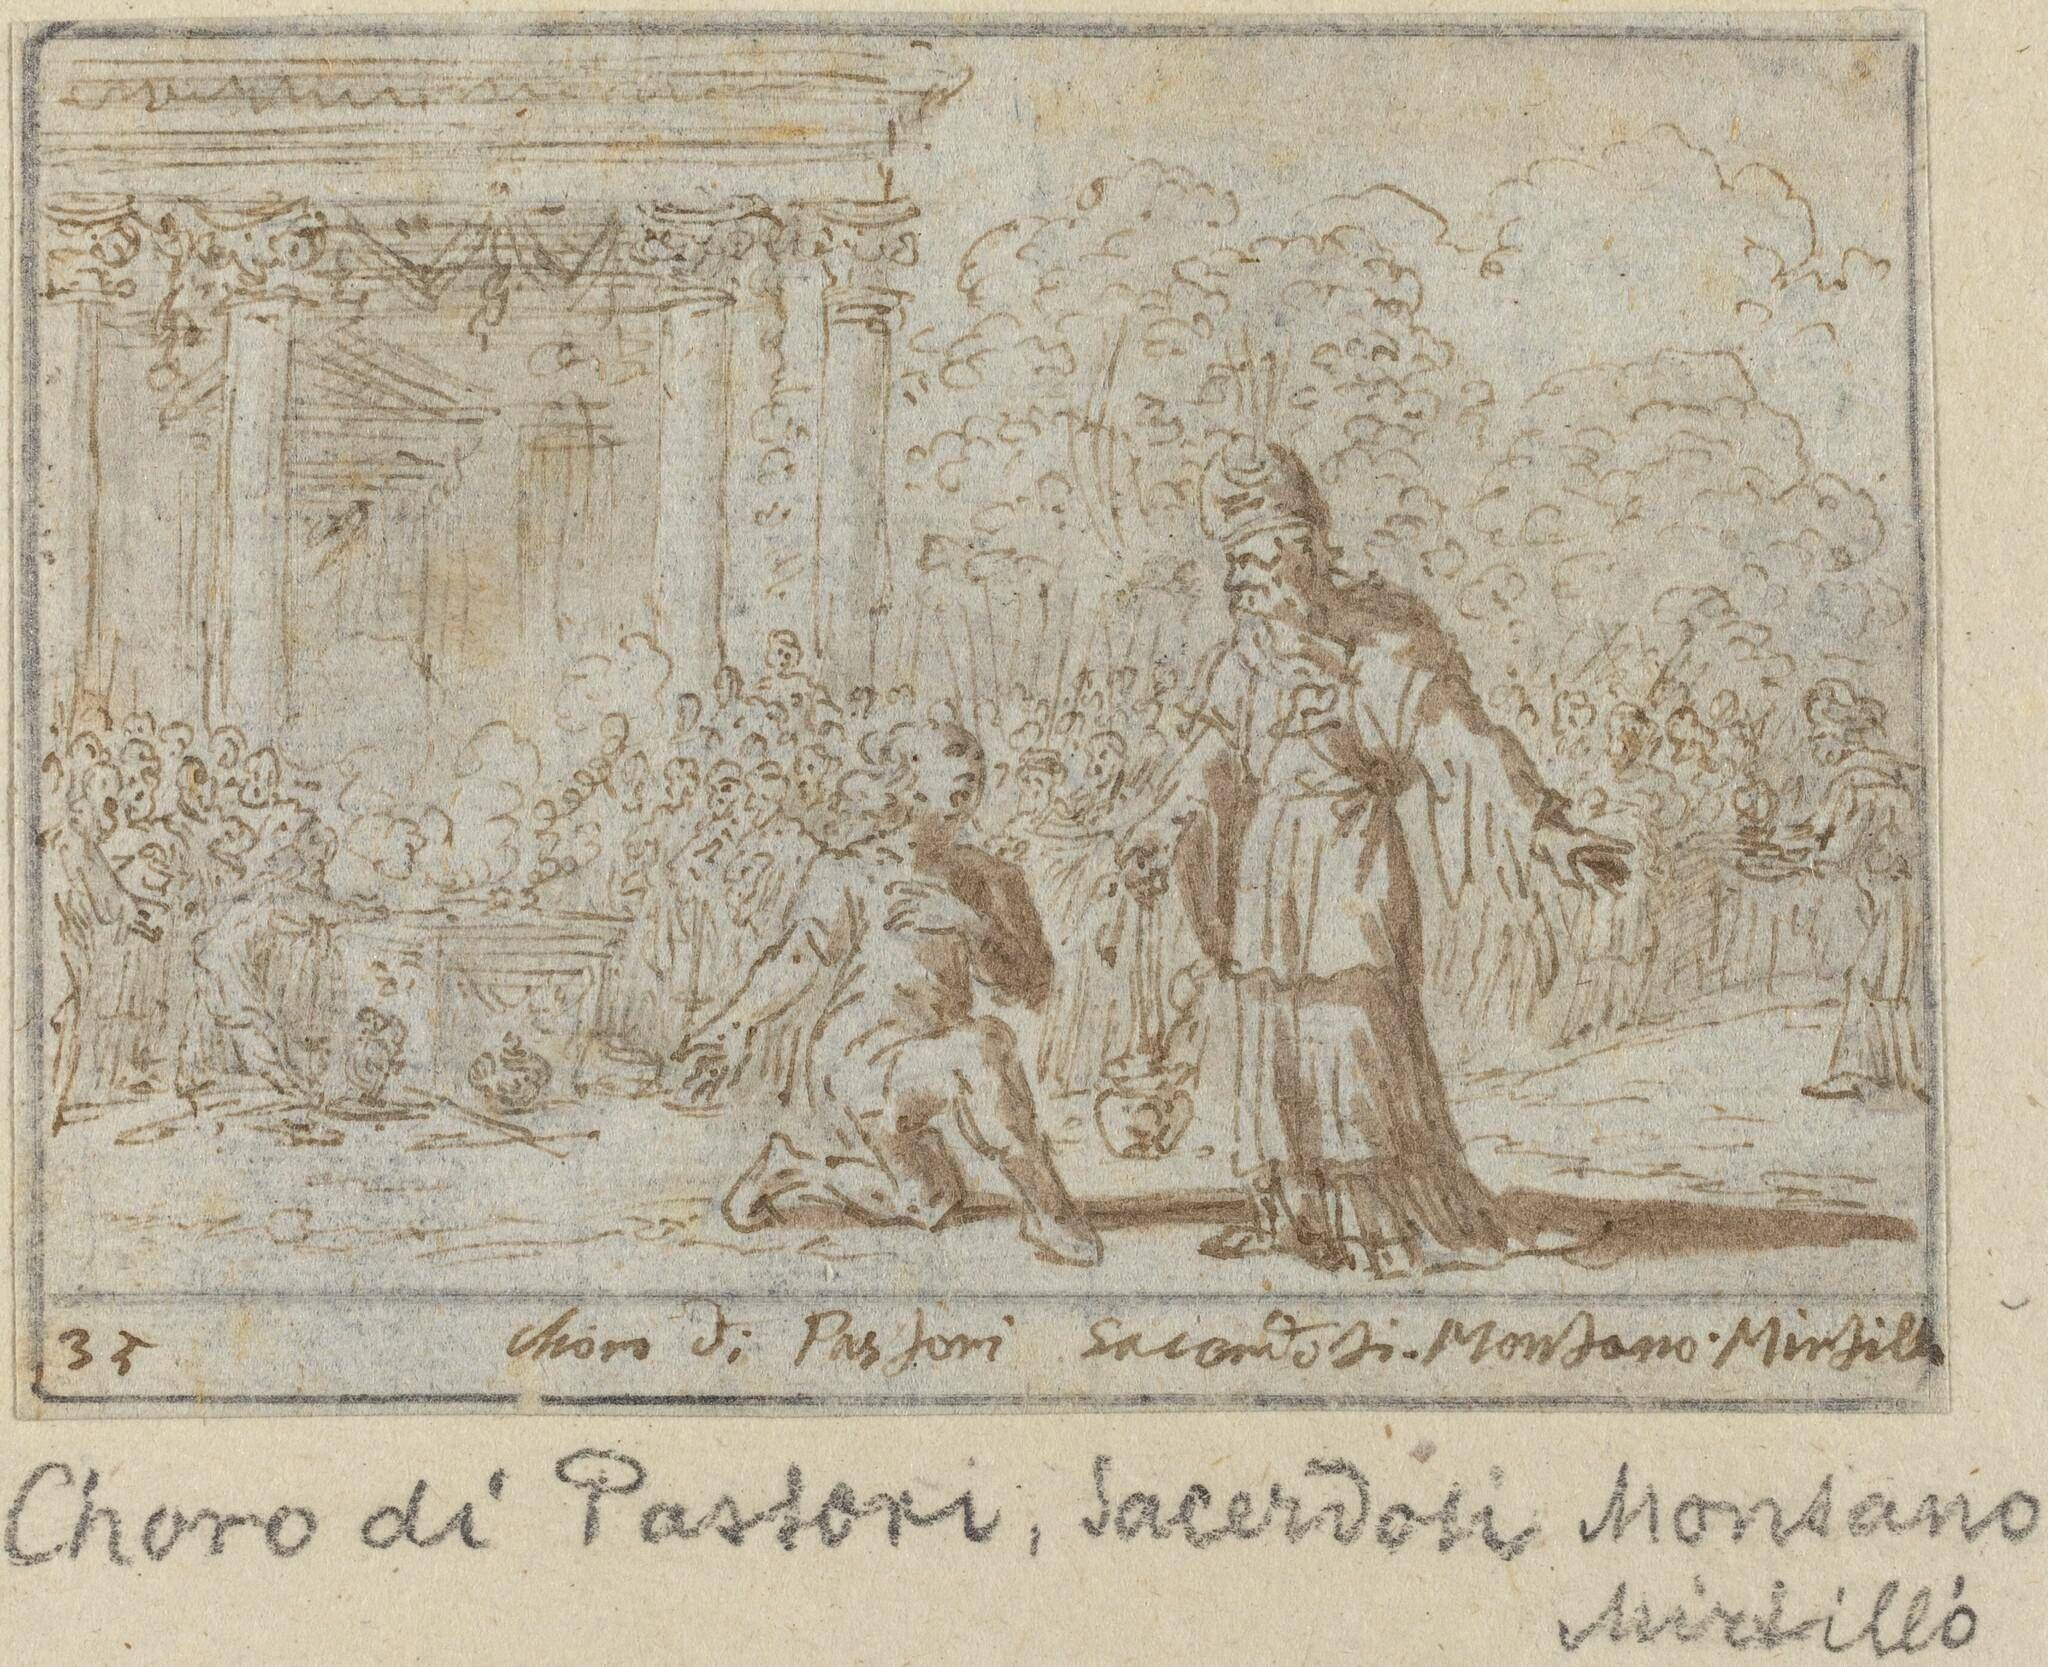 Chorus of Shepherds and Priests: Montano, Mirtillo